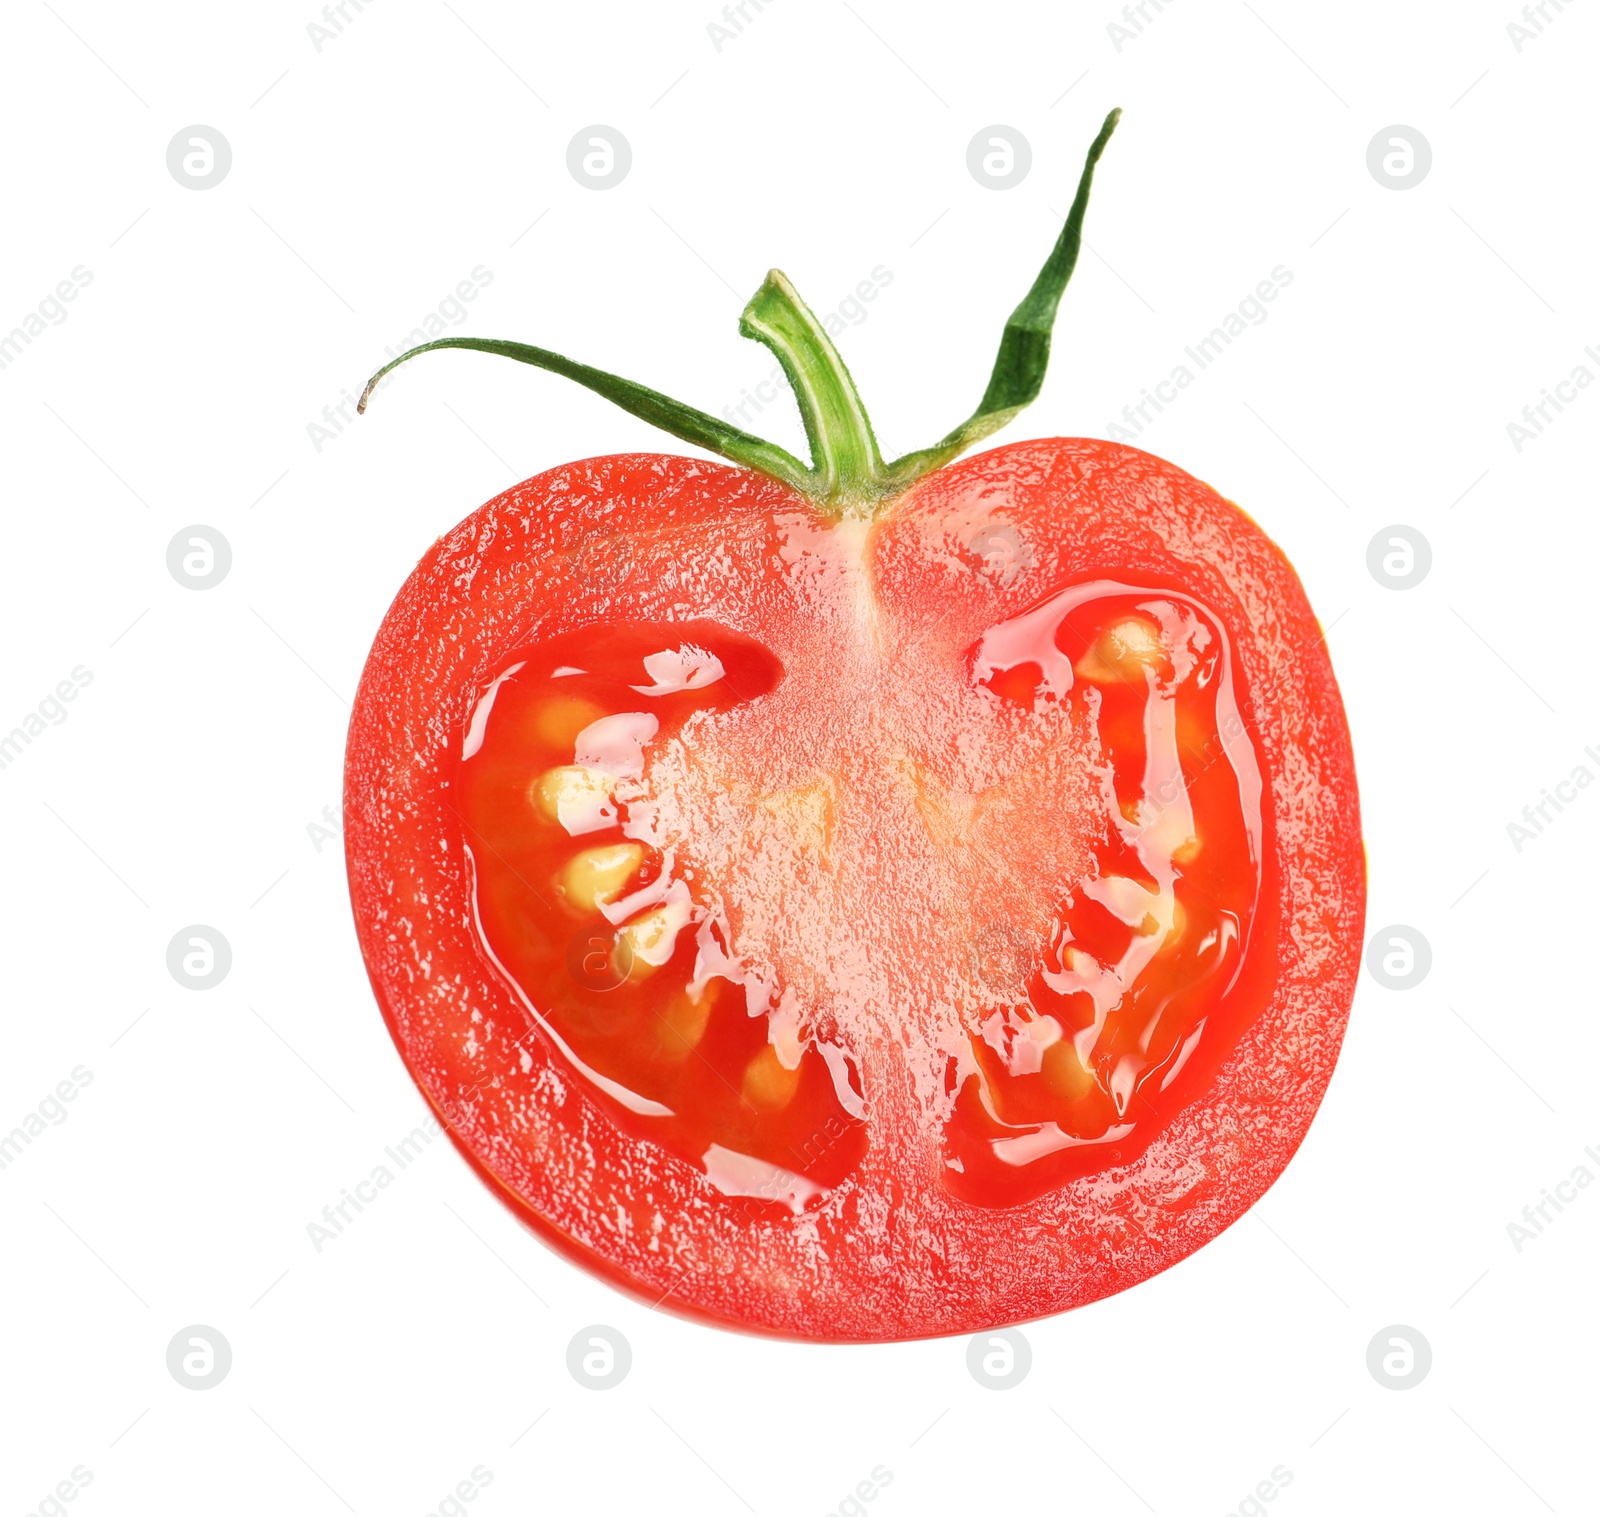 Photo of Half of fresh cherry tomato isolated on white